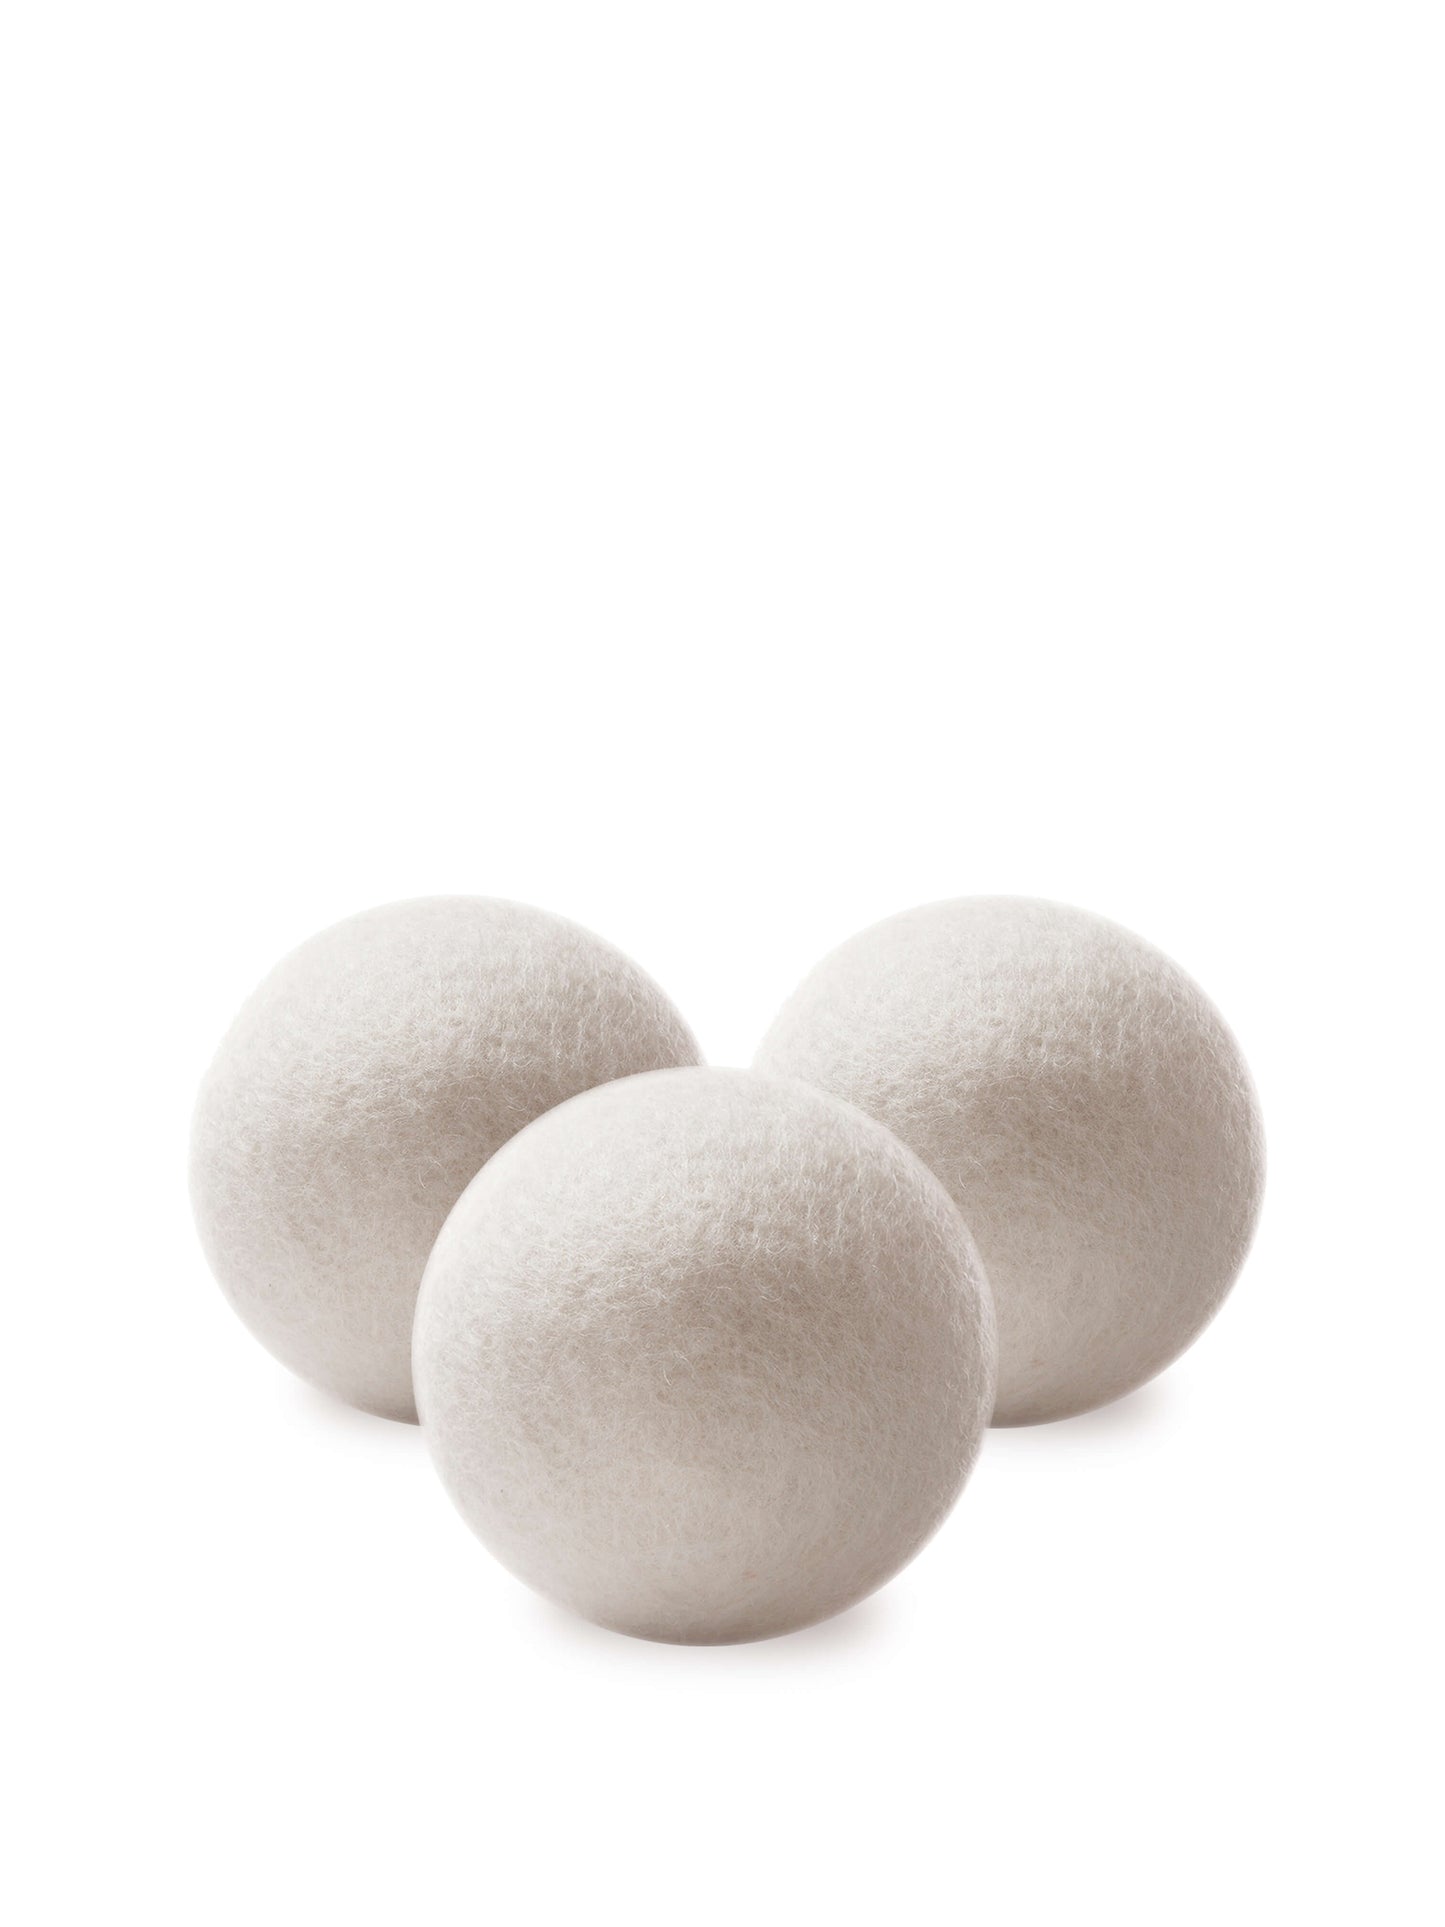 3 white wool dryer balls